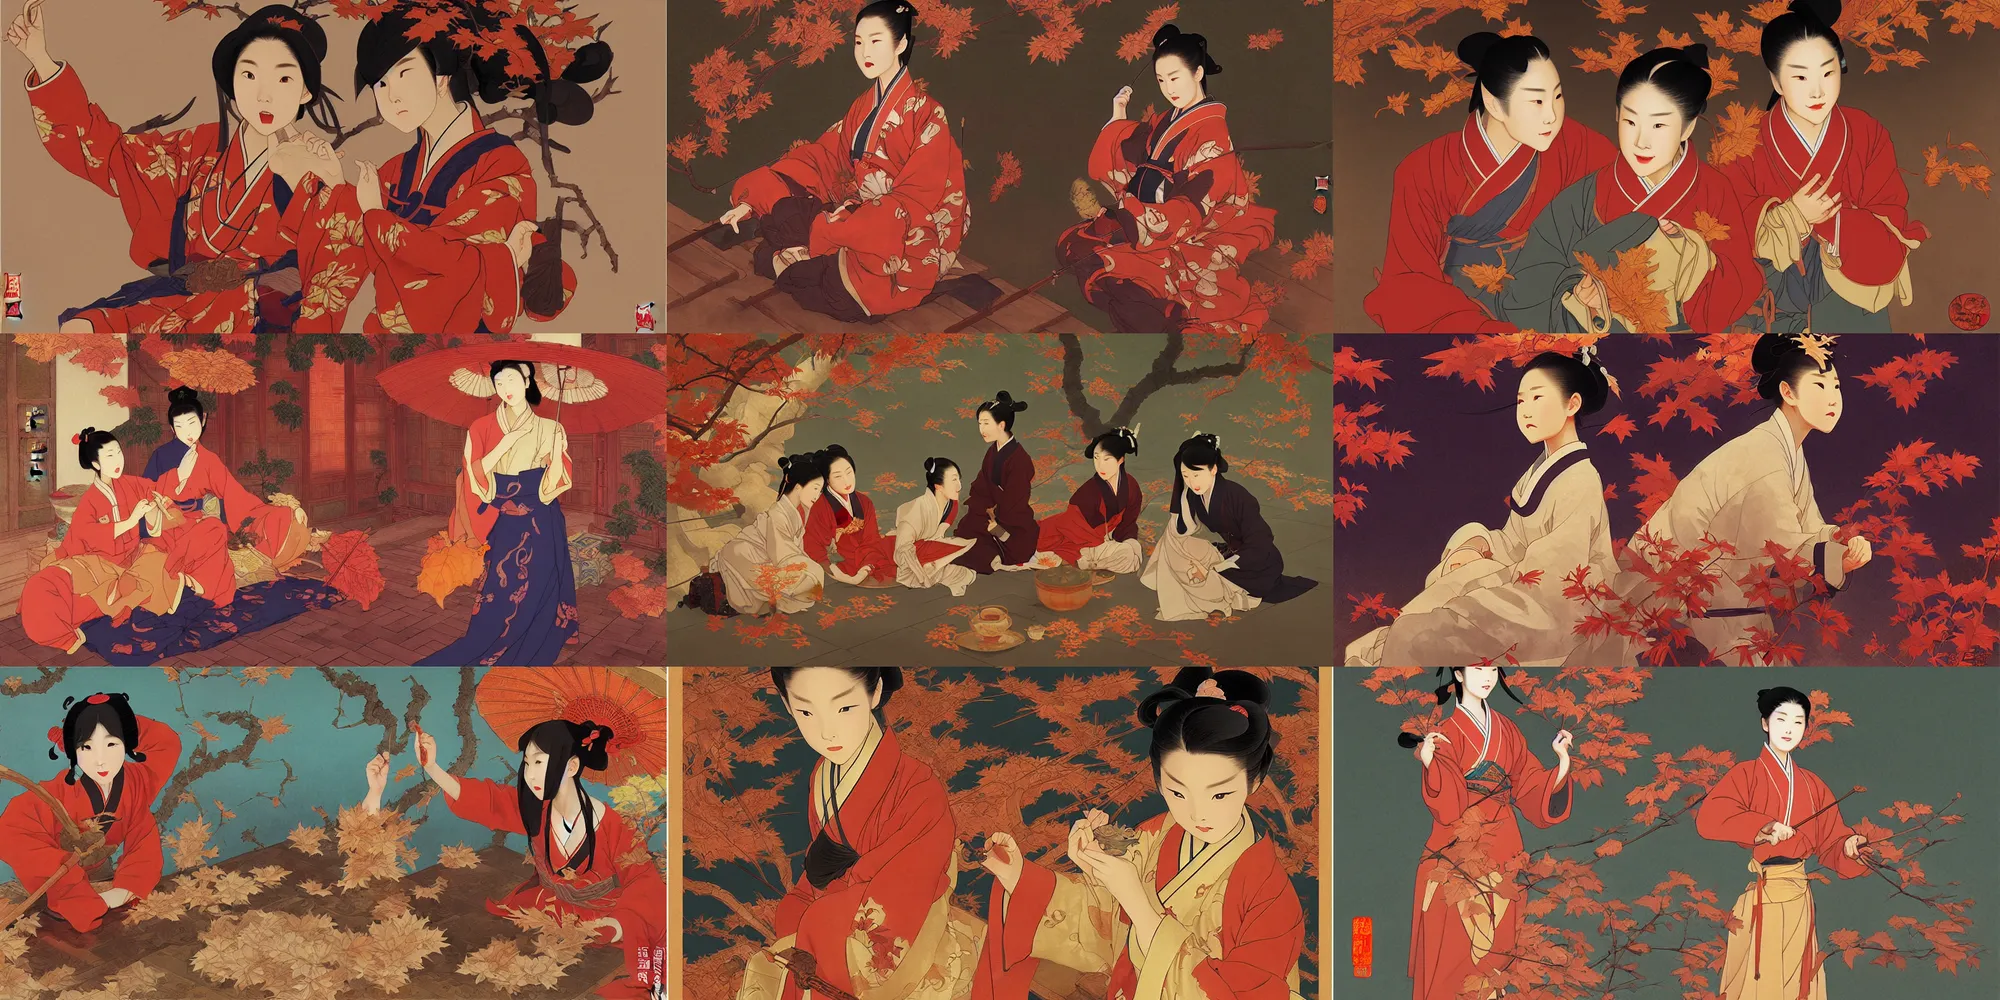 Prompt: ming dynasty, autumn, in the style of studio ghibli, j. c. leyendecker, greg rutkowski, artem